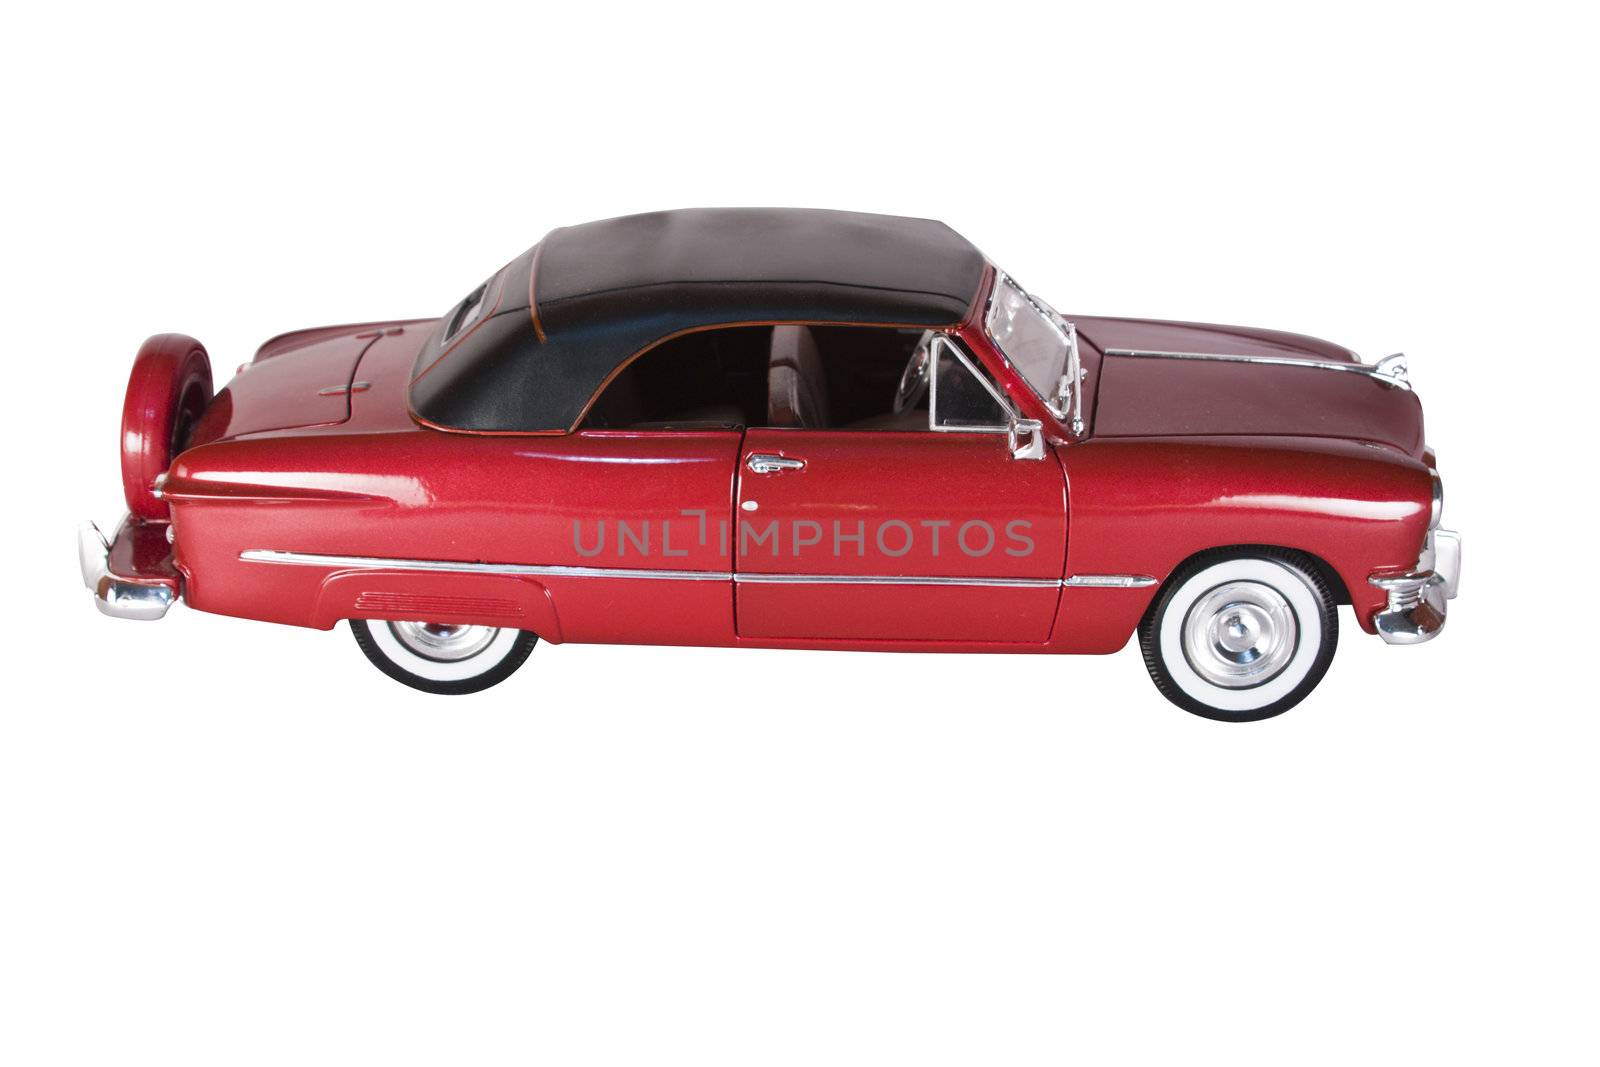 Classic 50's American Car by smoki